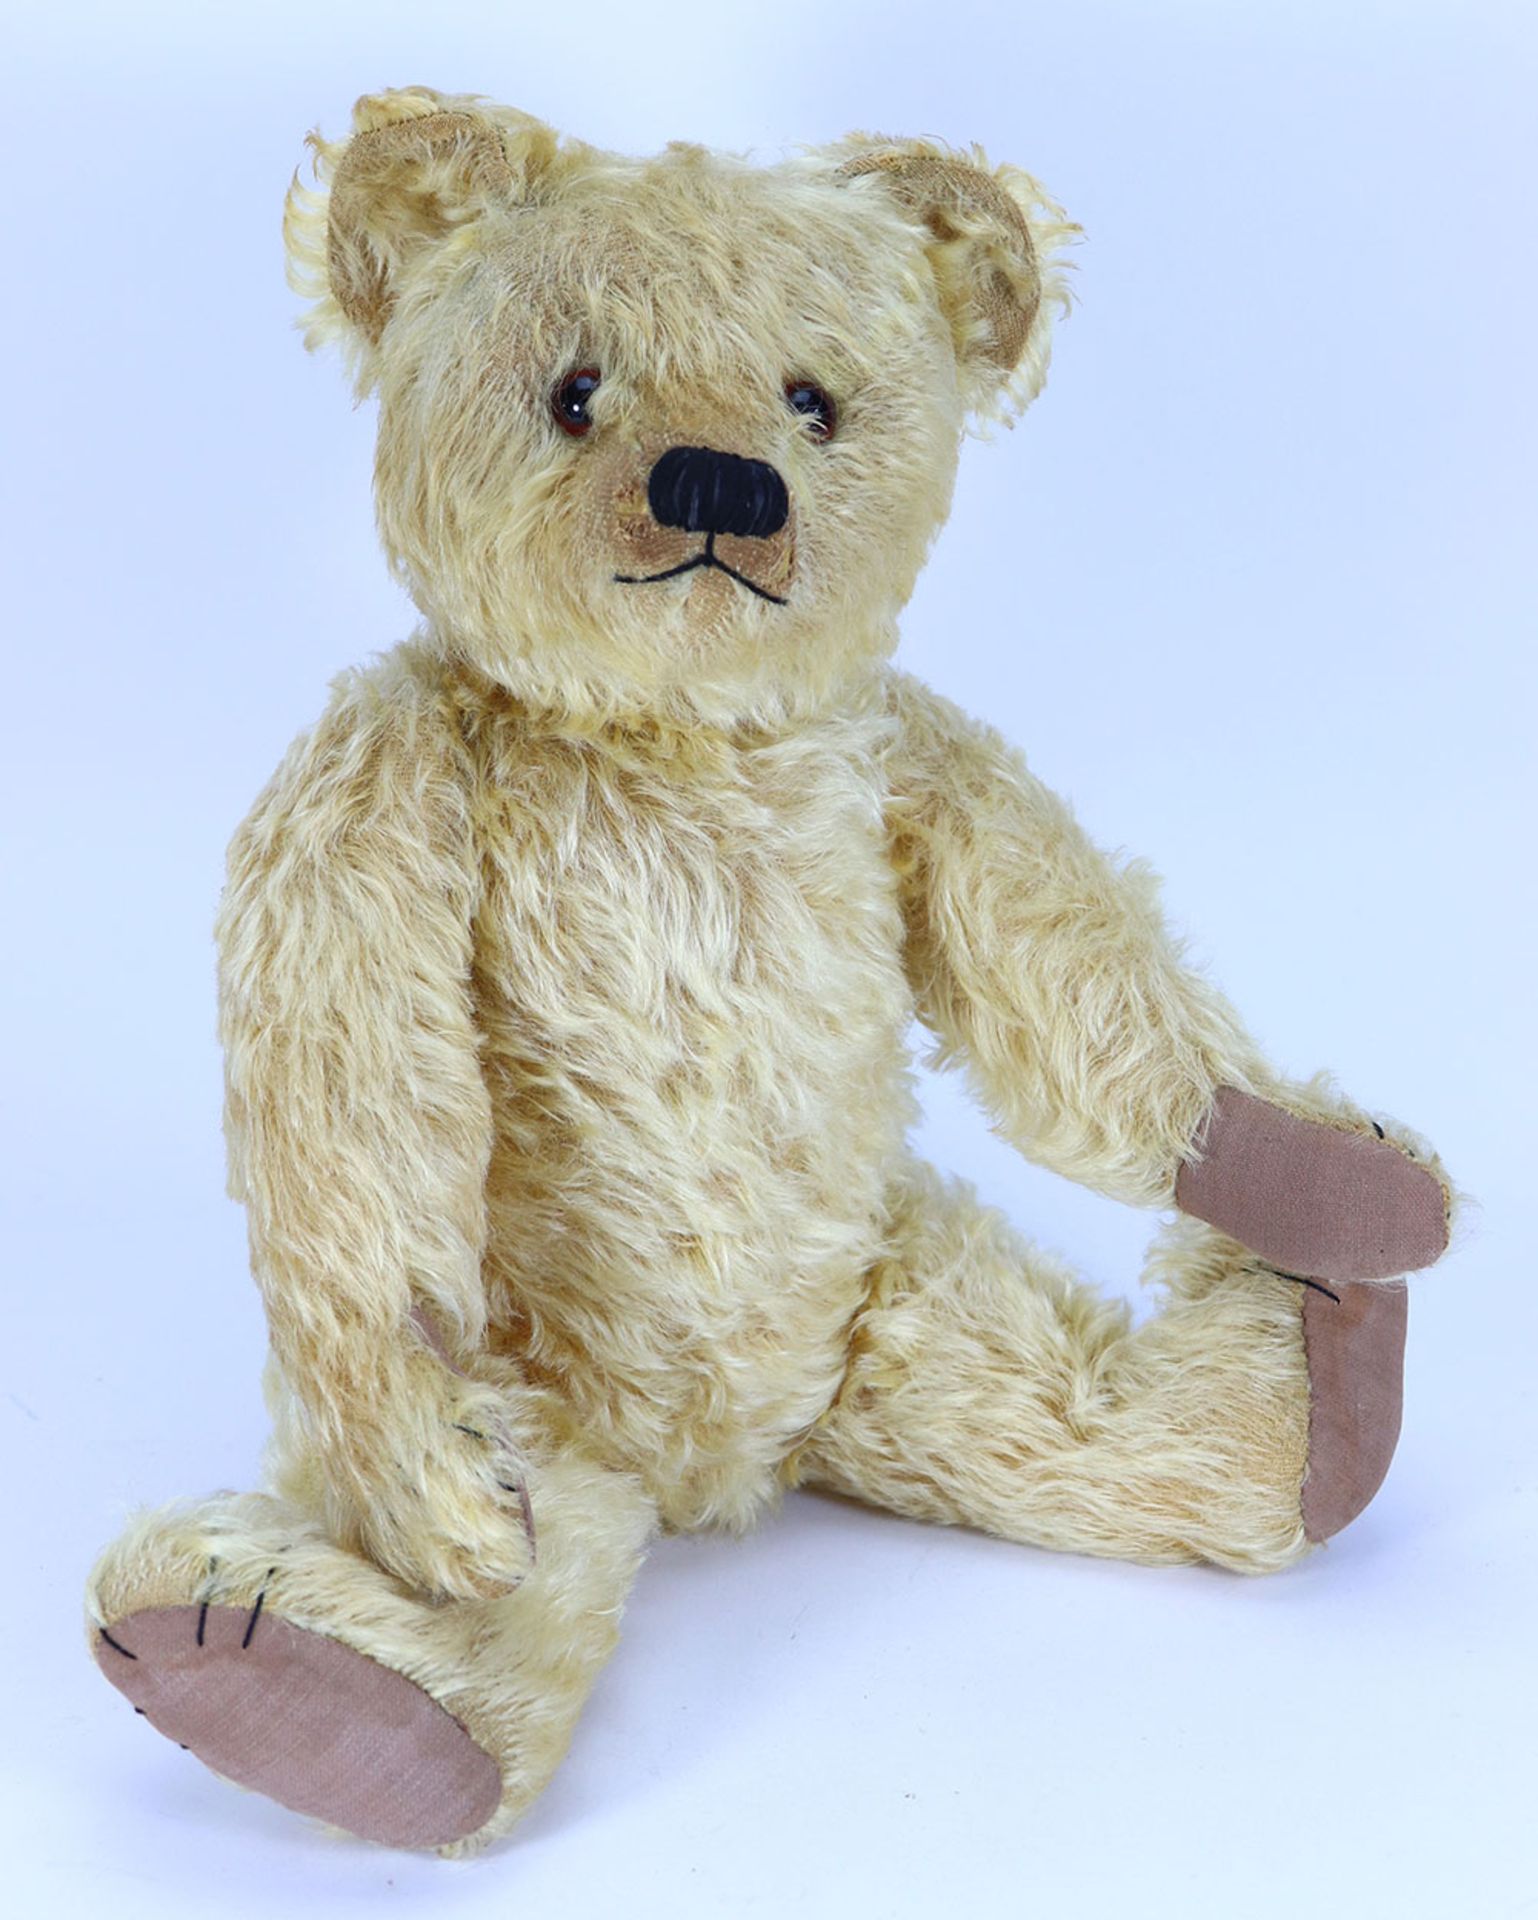 A J.K Farnell golden mohair Teddy bear, circa 1930,